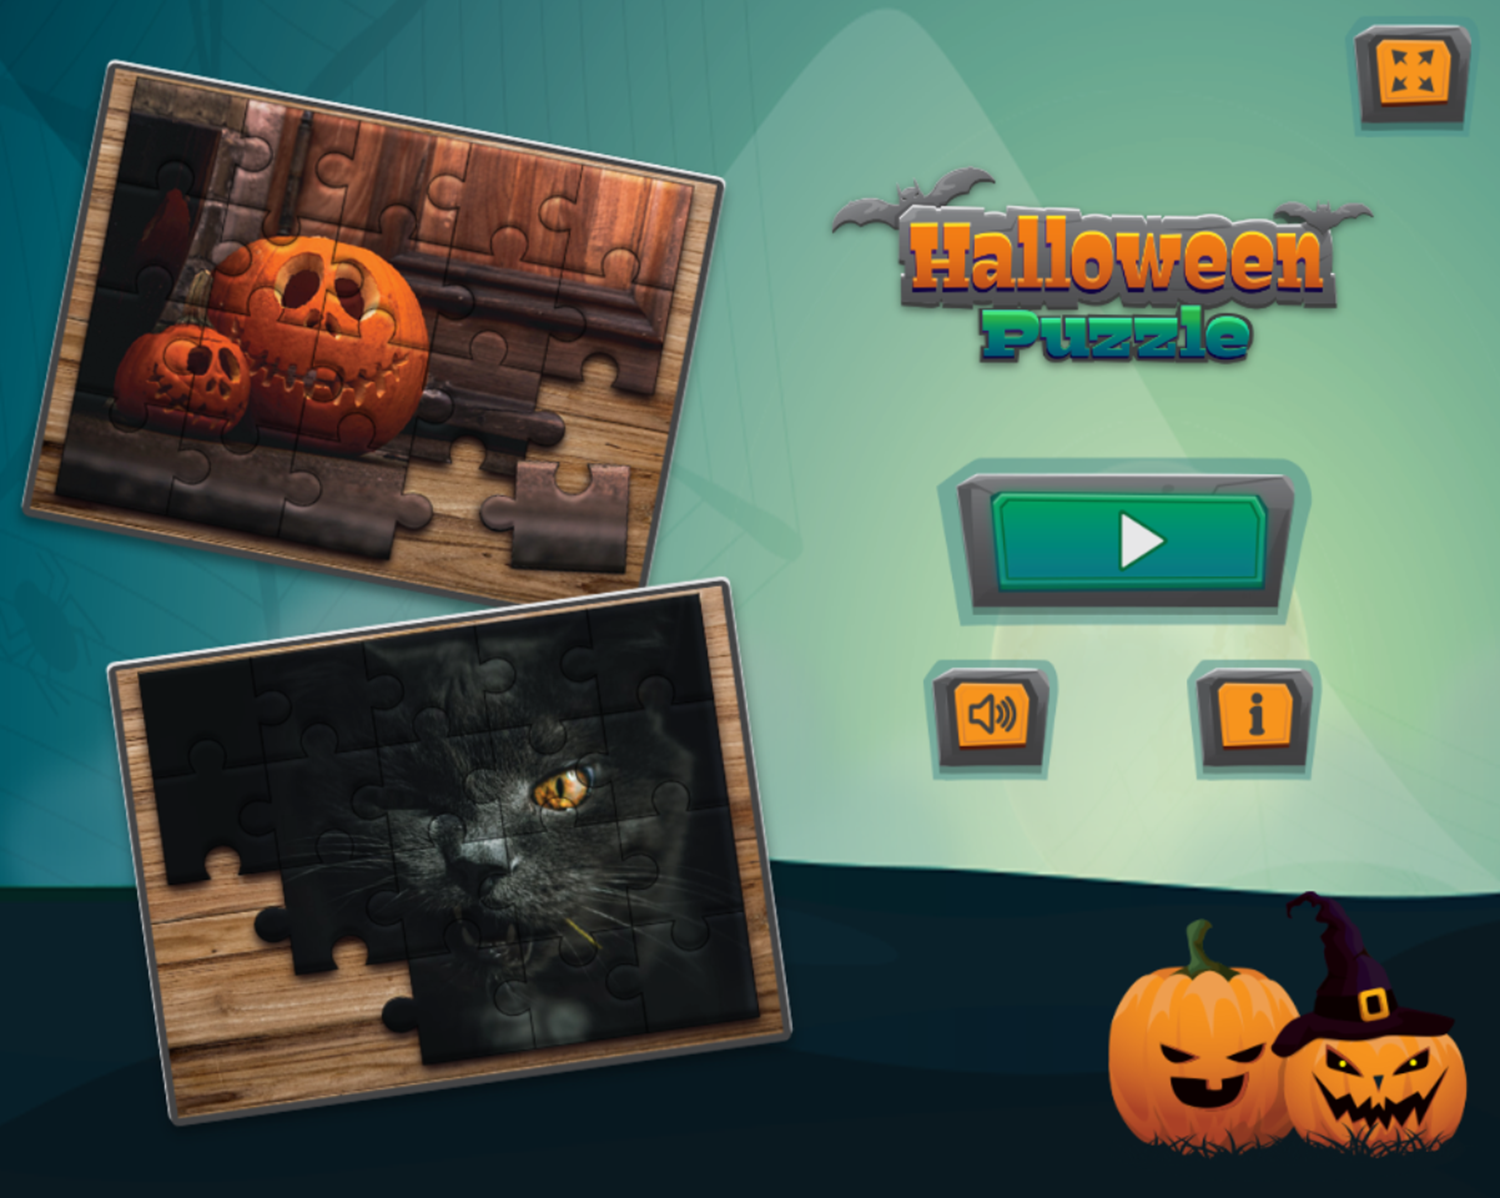 Halloween Puzzle Game Welcome Screen Screenshot.